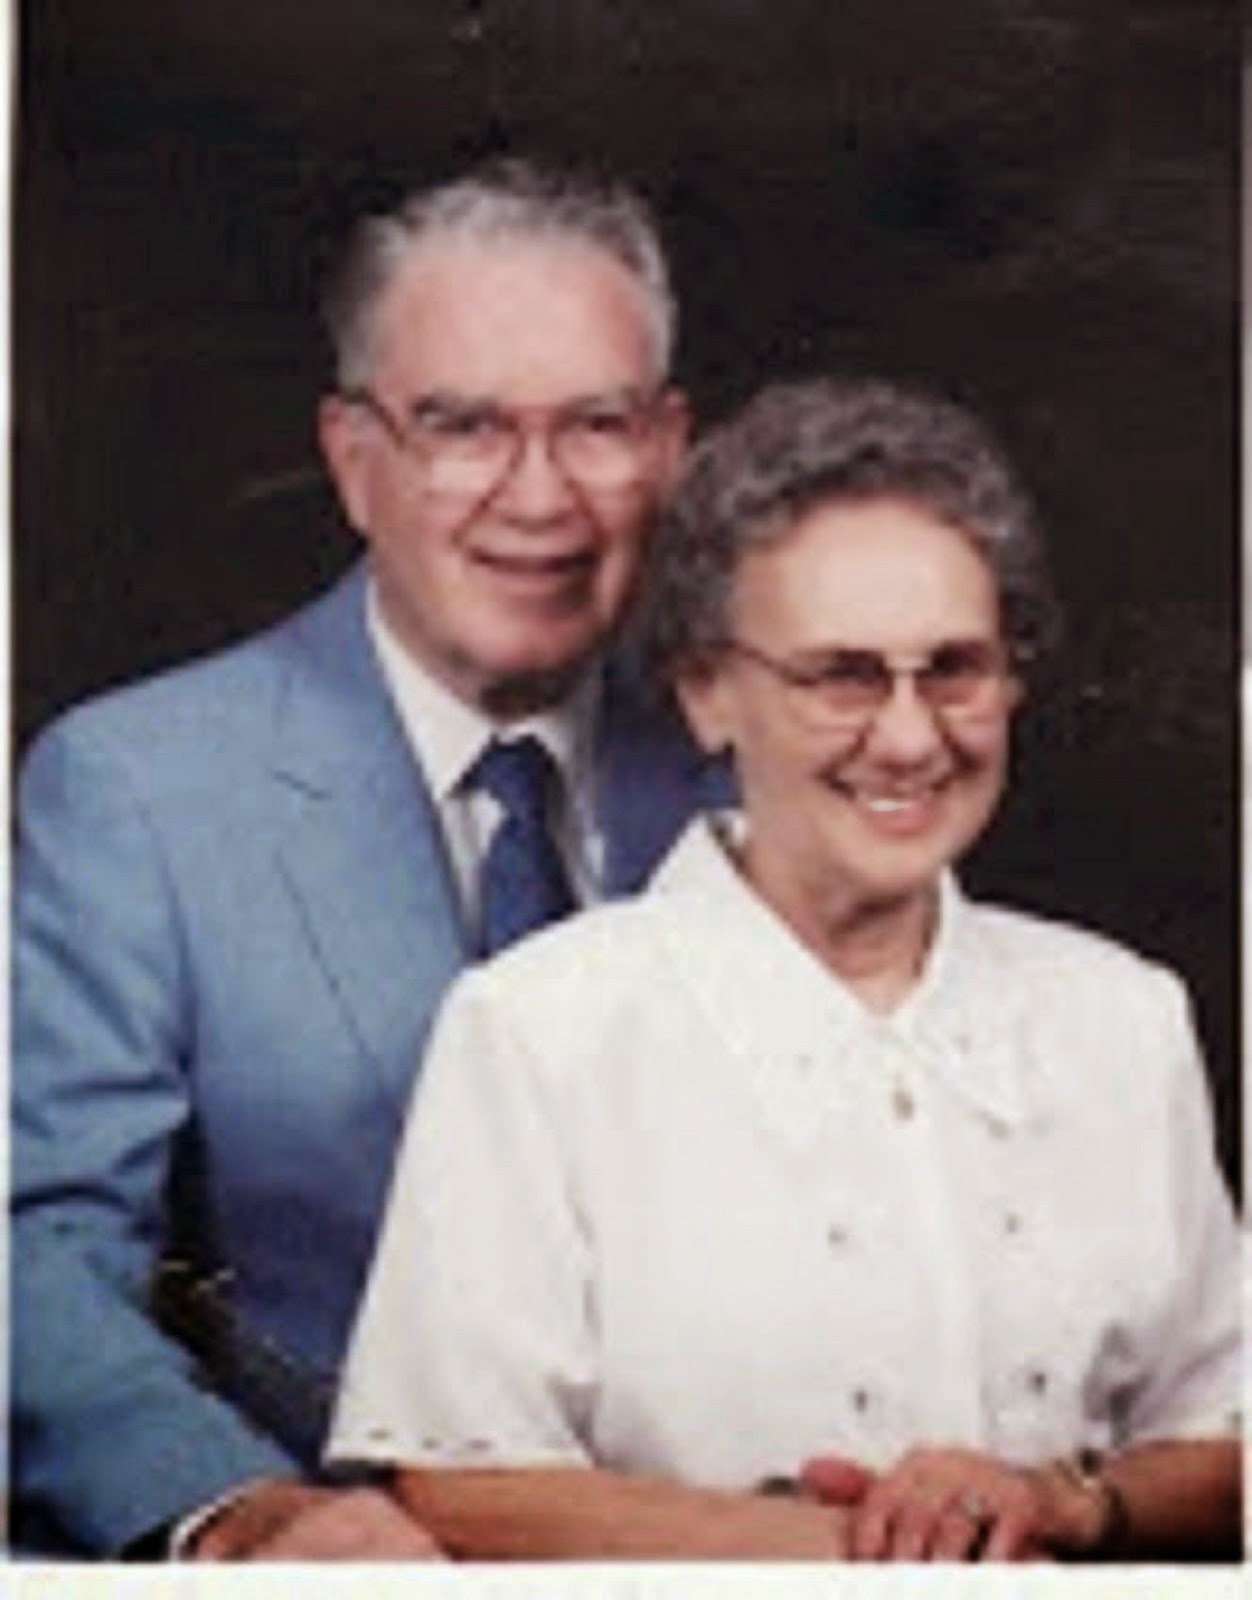 MY DAD ZELMAR AND MOM IRENE ON THEIR 50TH WEDDING ANNIVERSARY